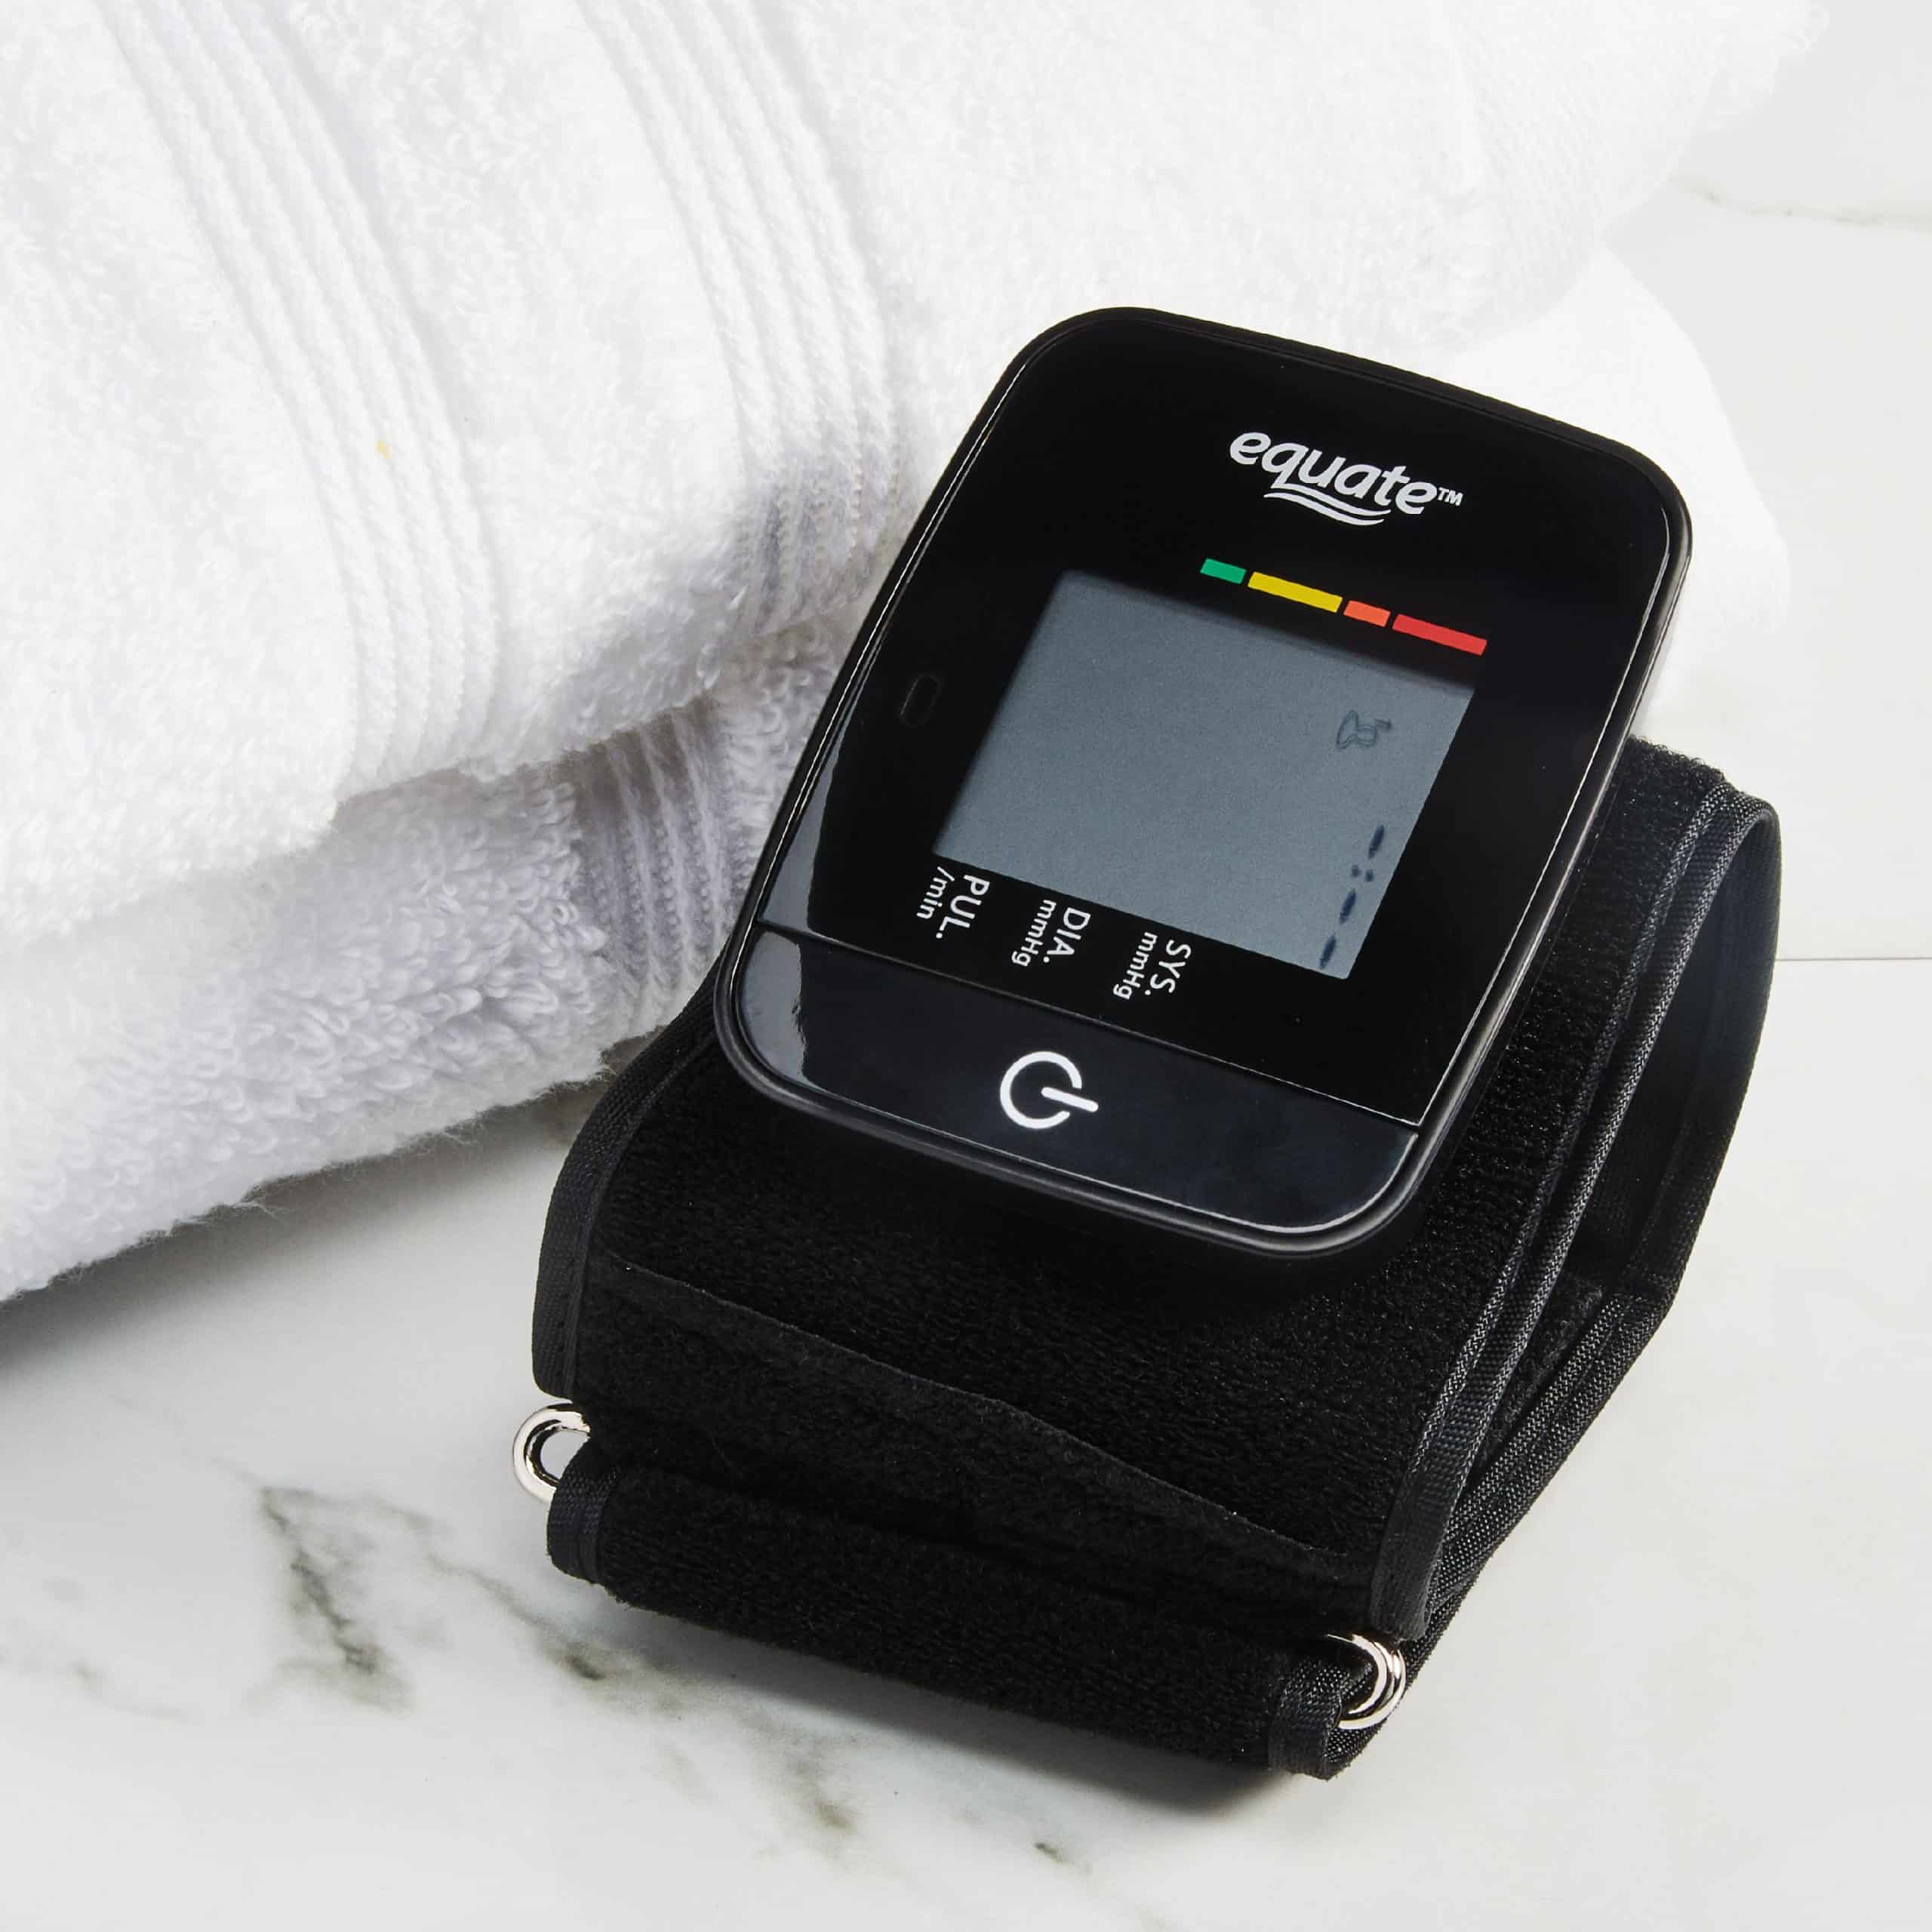 Equate 4500 Blood Pressure Monitor Manual